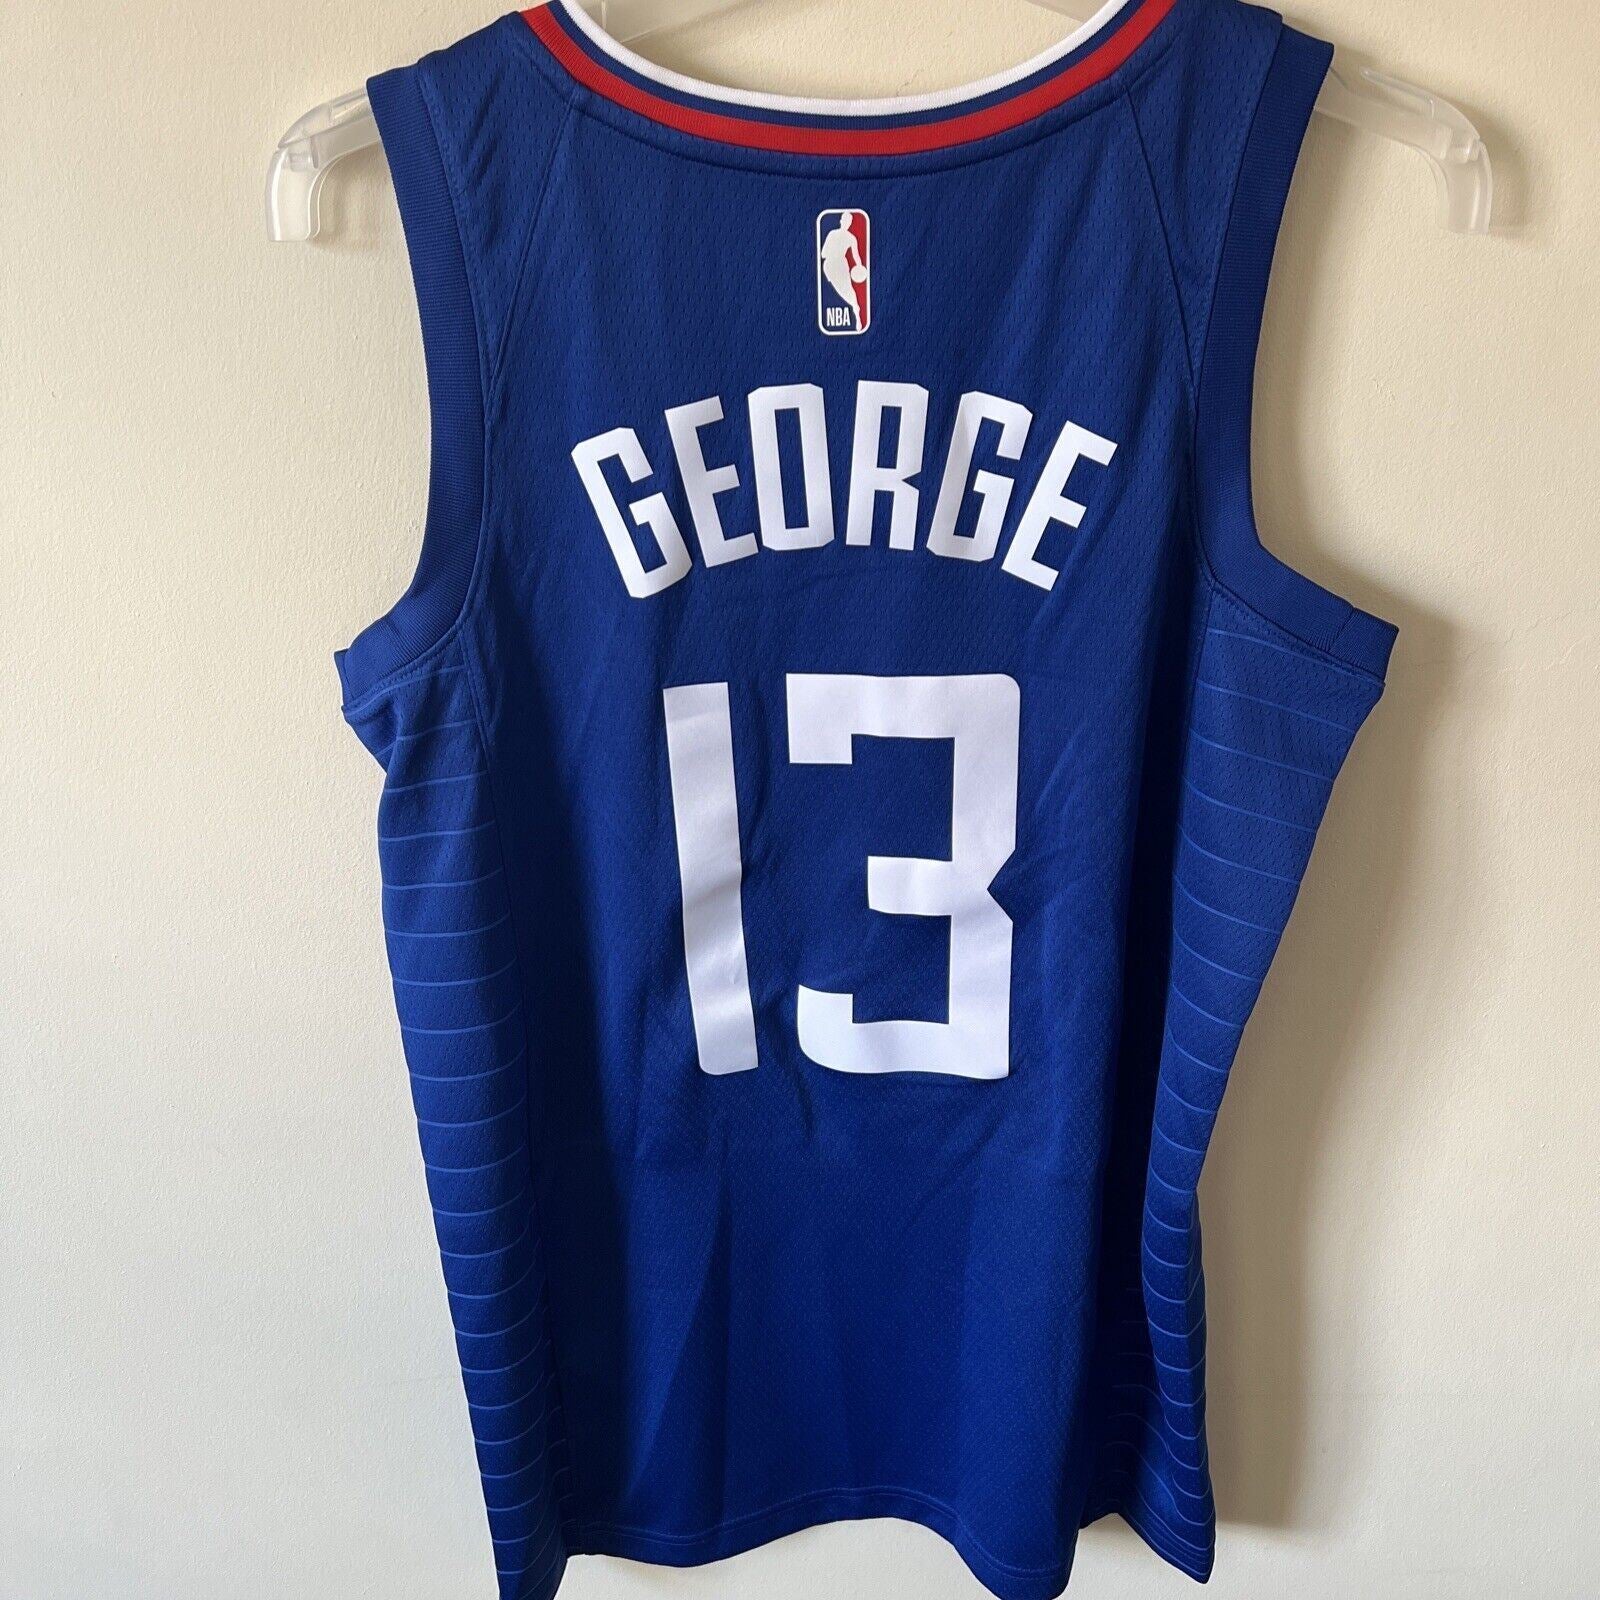 Nike NBA LA Clippers Swingman Edition Jersey George 13 Basketball Men’s Small